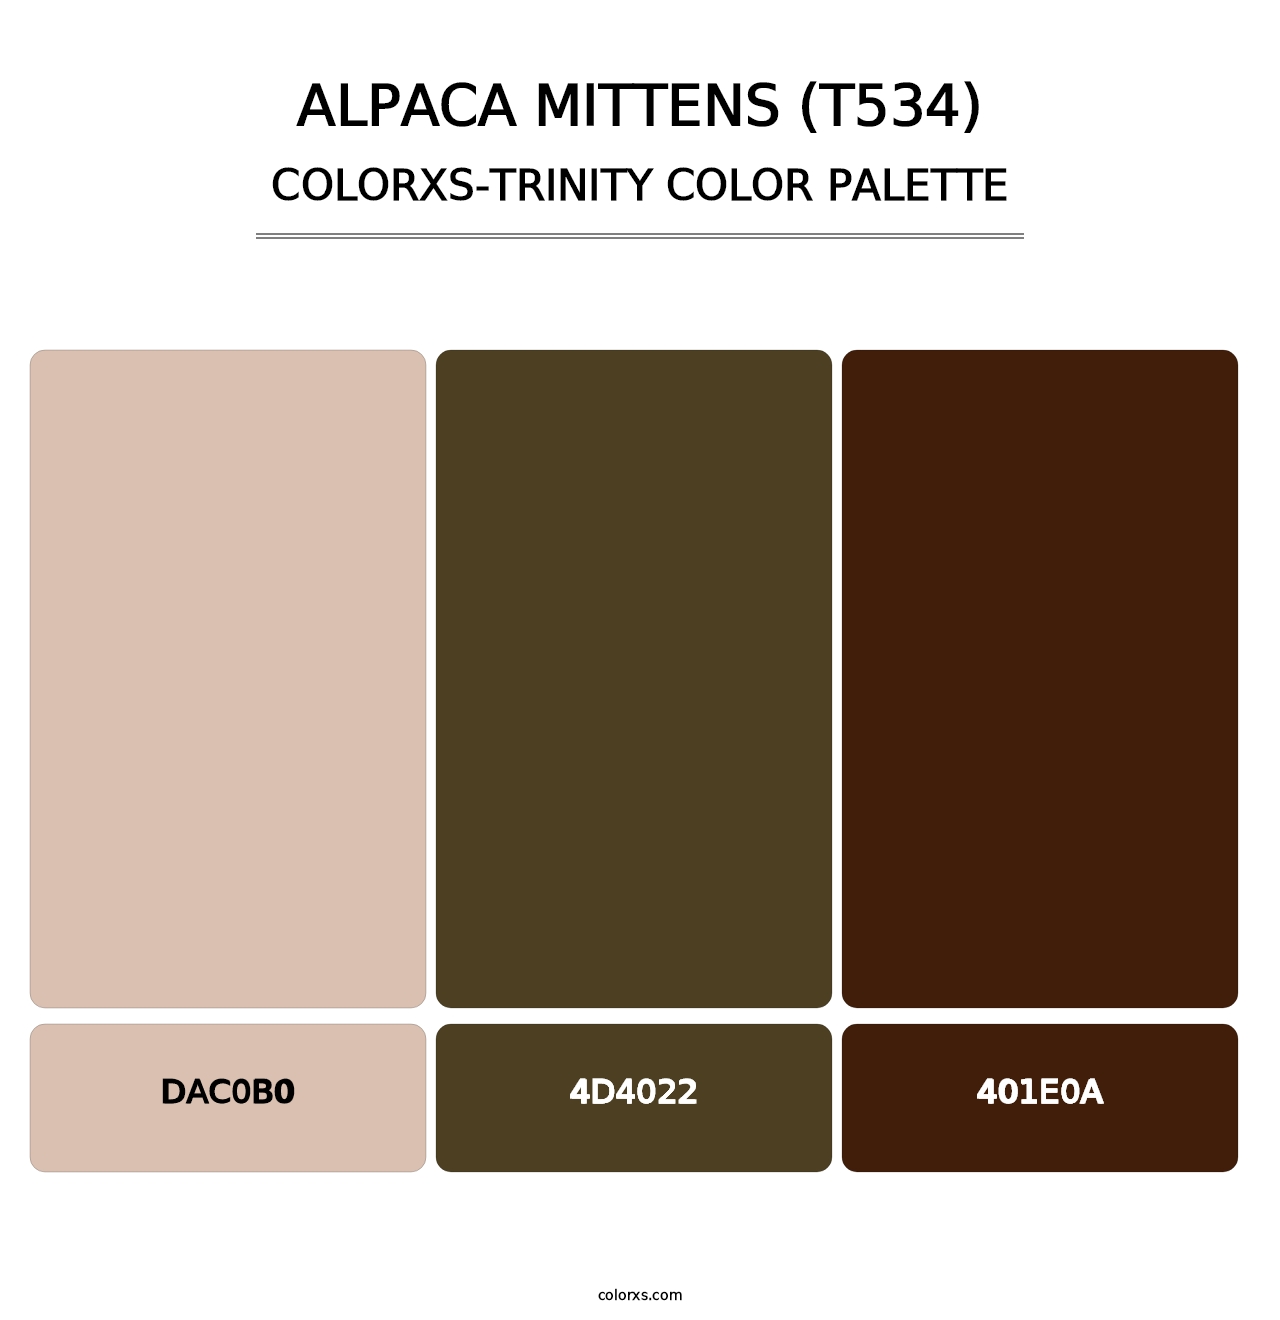 Alpaca Mittens (T534) - Colorxs Trinity Palette